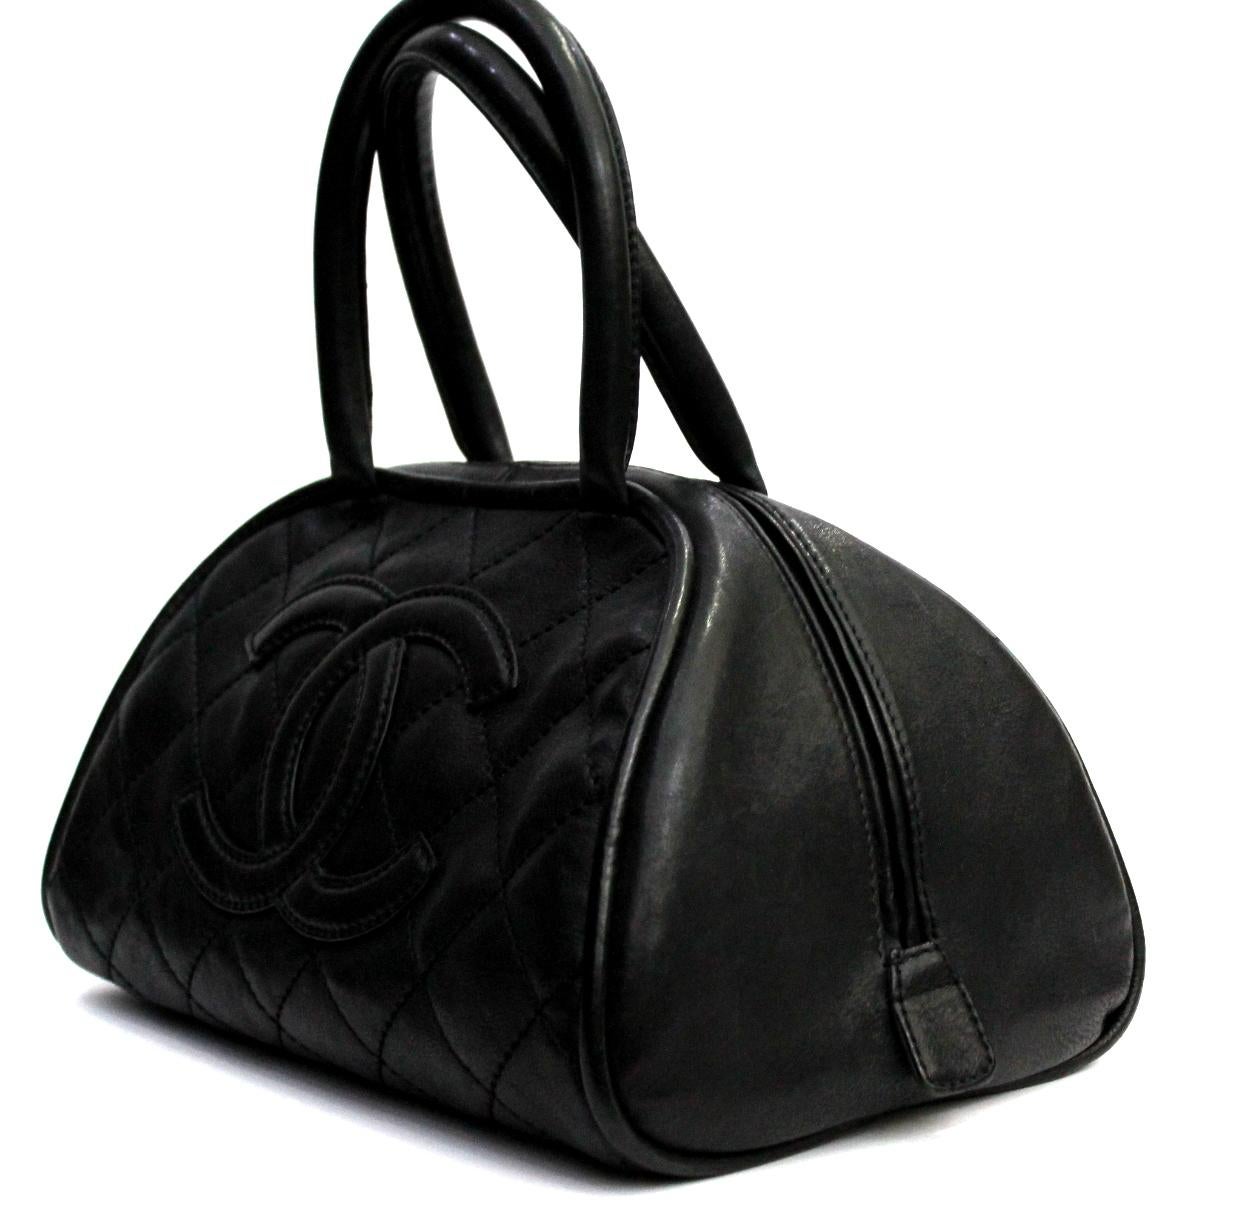 Women's 2005/06 Chanel Black Leather Top Handel Bag